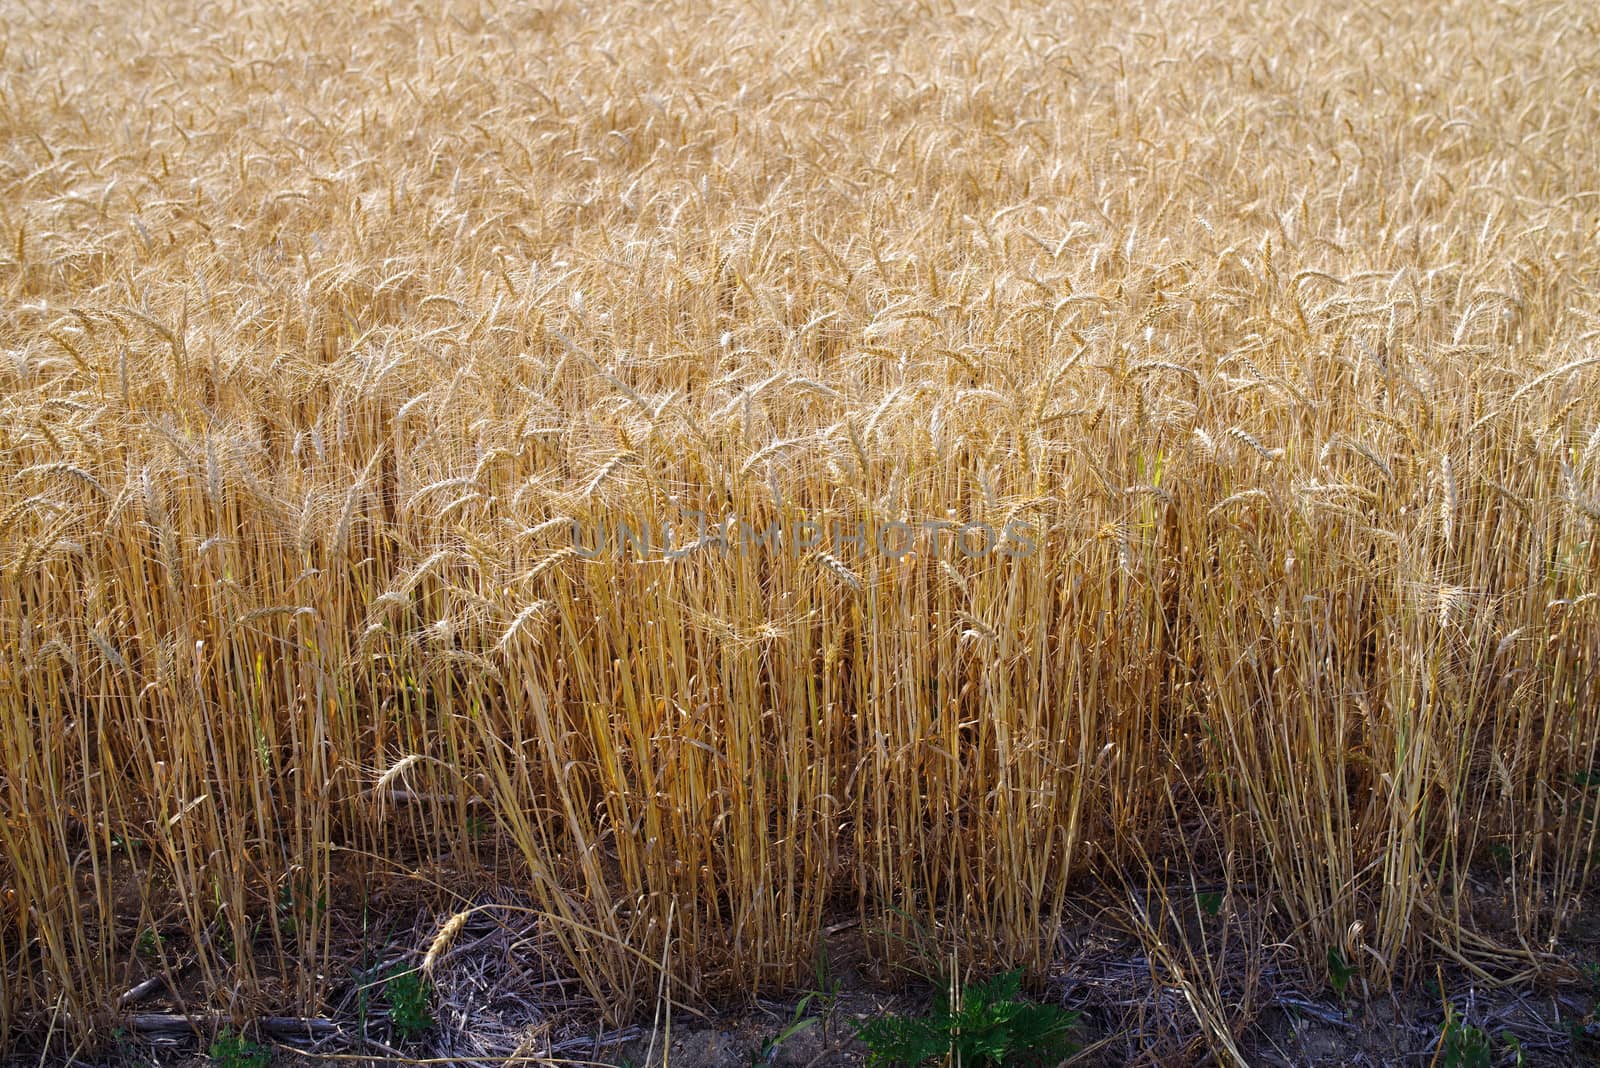 Big Autumn wheat field in golden hour sunlight by marysalen